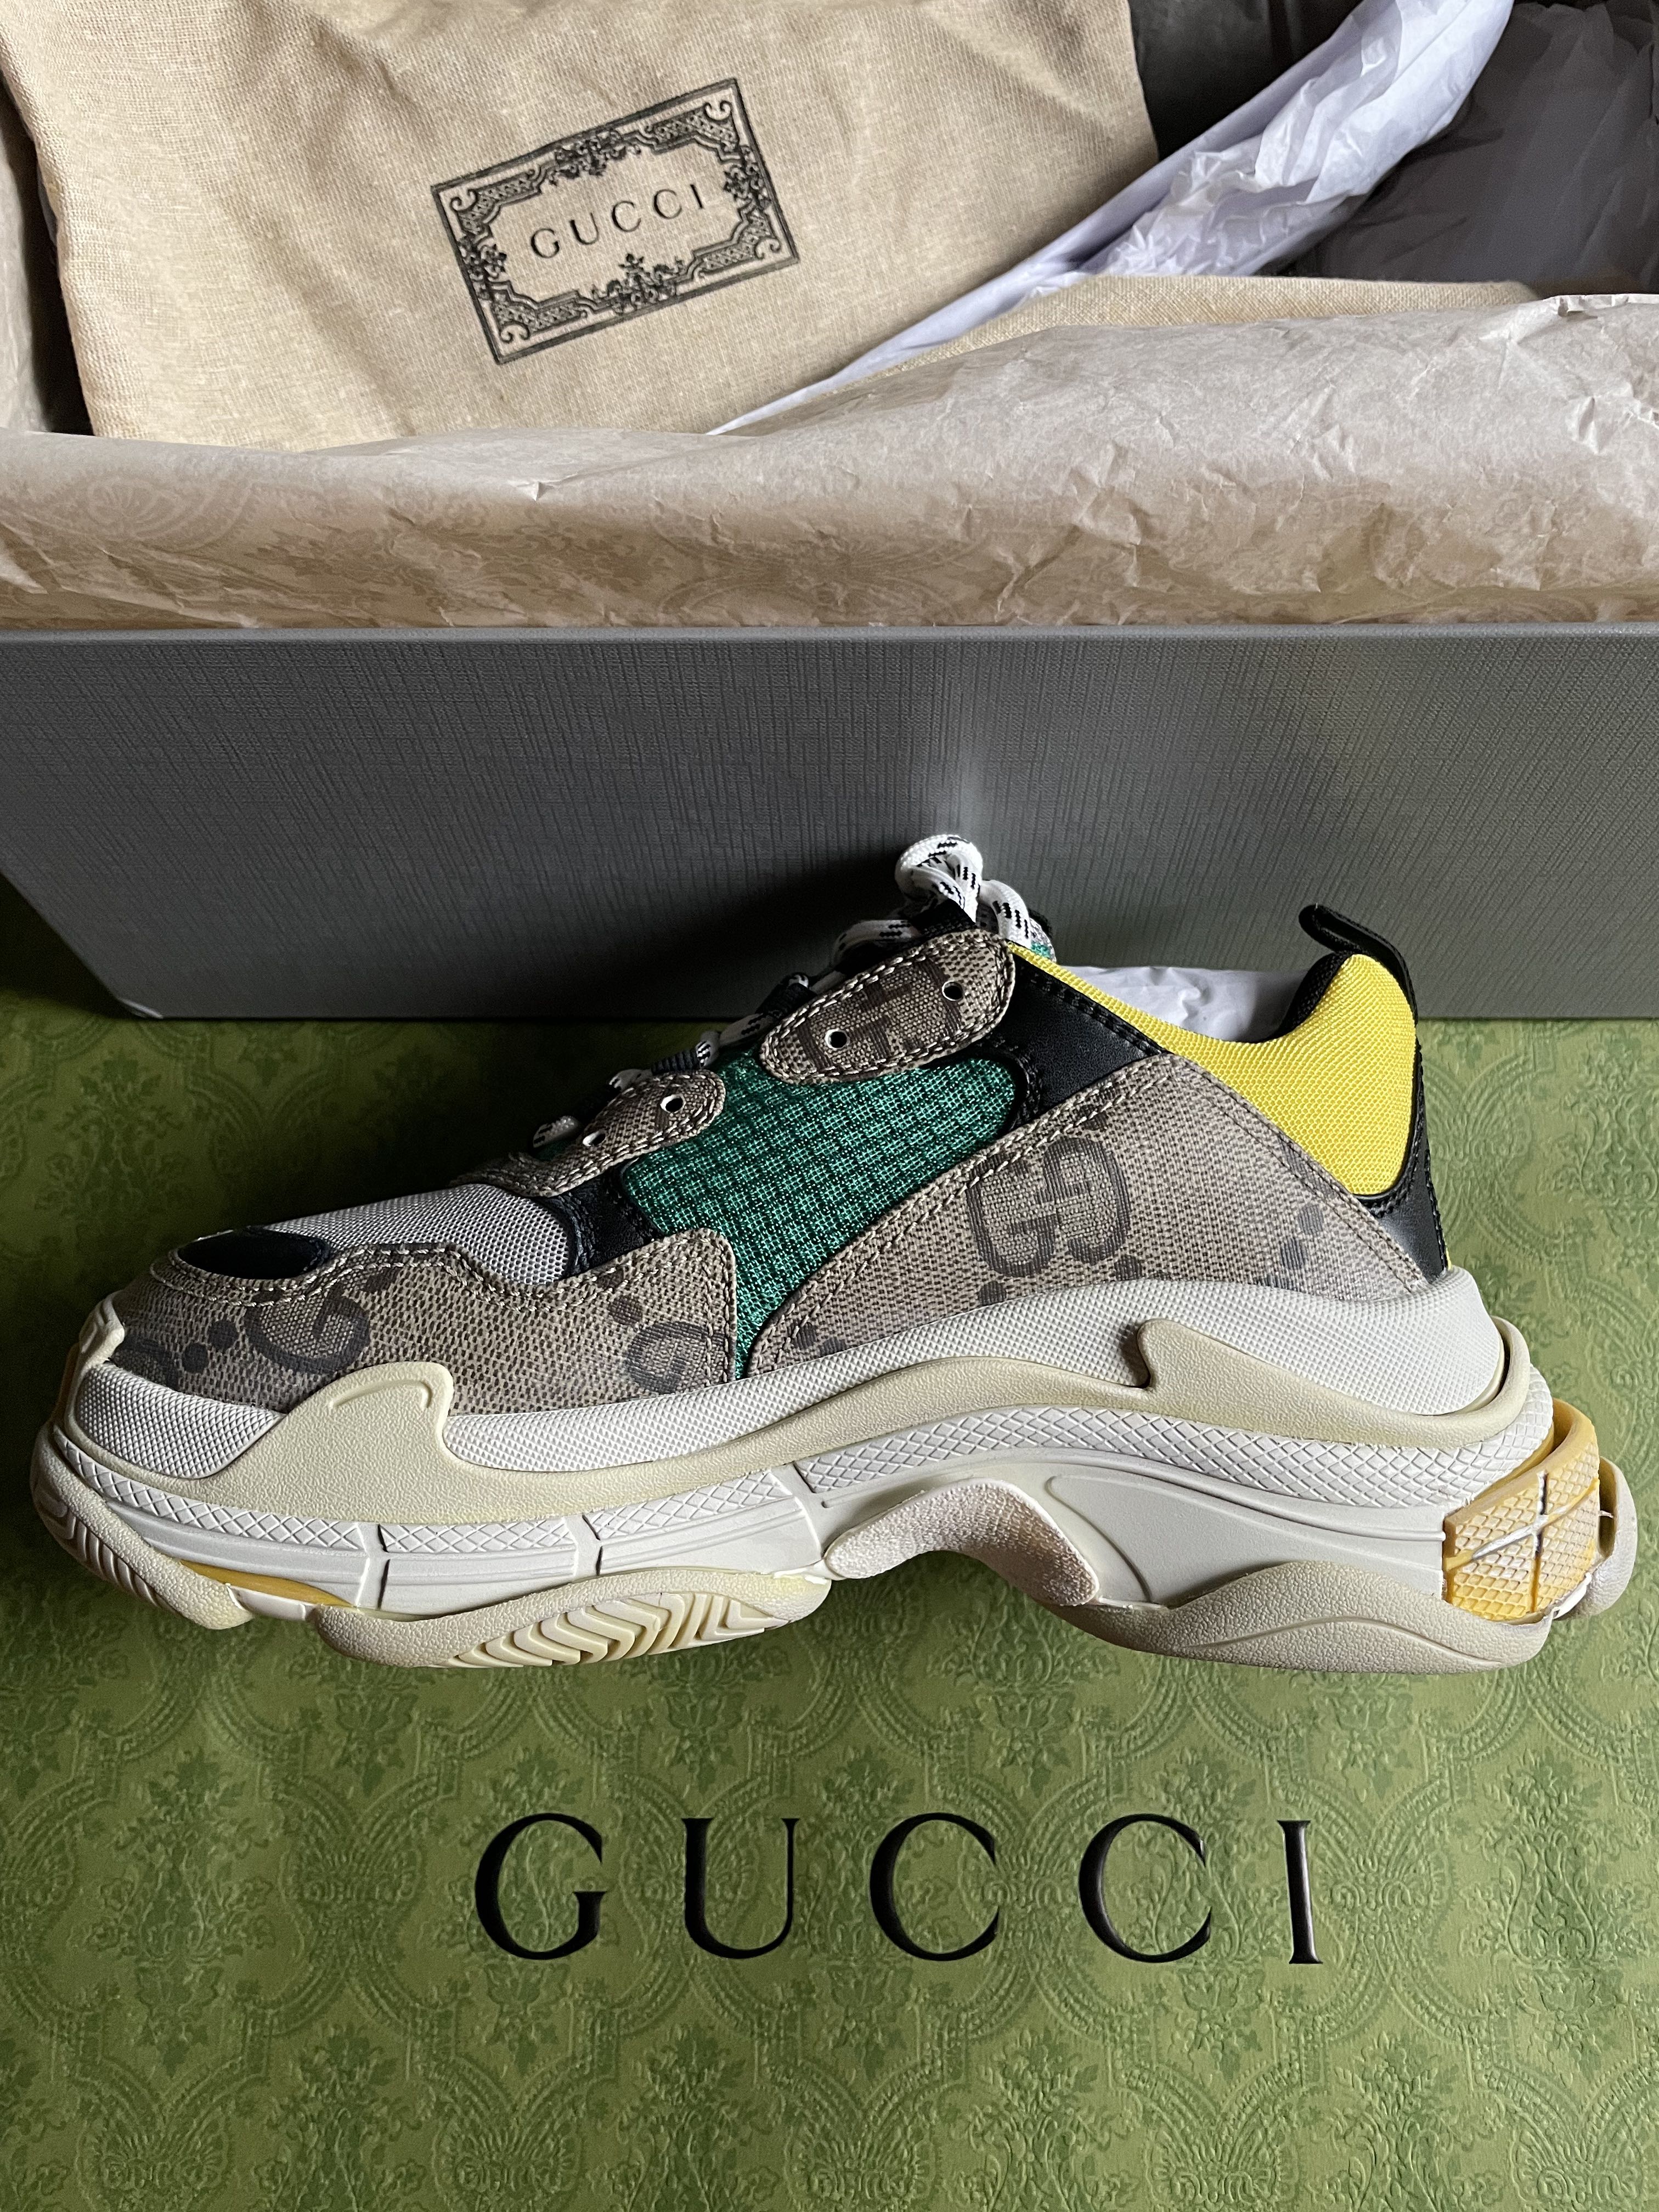 Gucci x Balenciaga The Hacker Project Triple S Sneakers Size 44/11US New!!